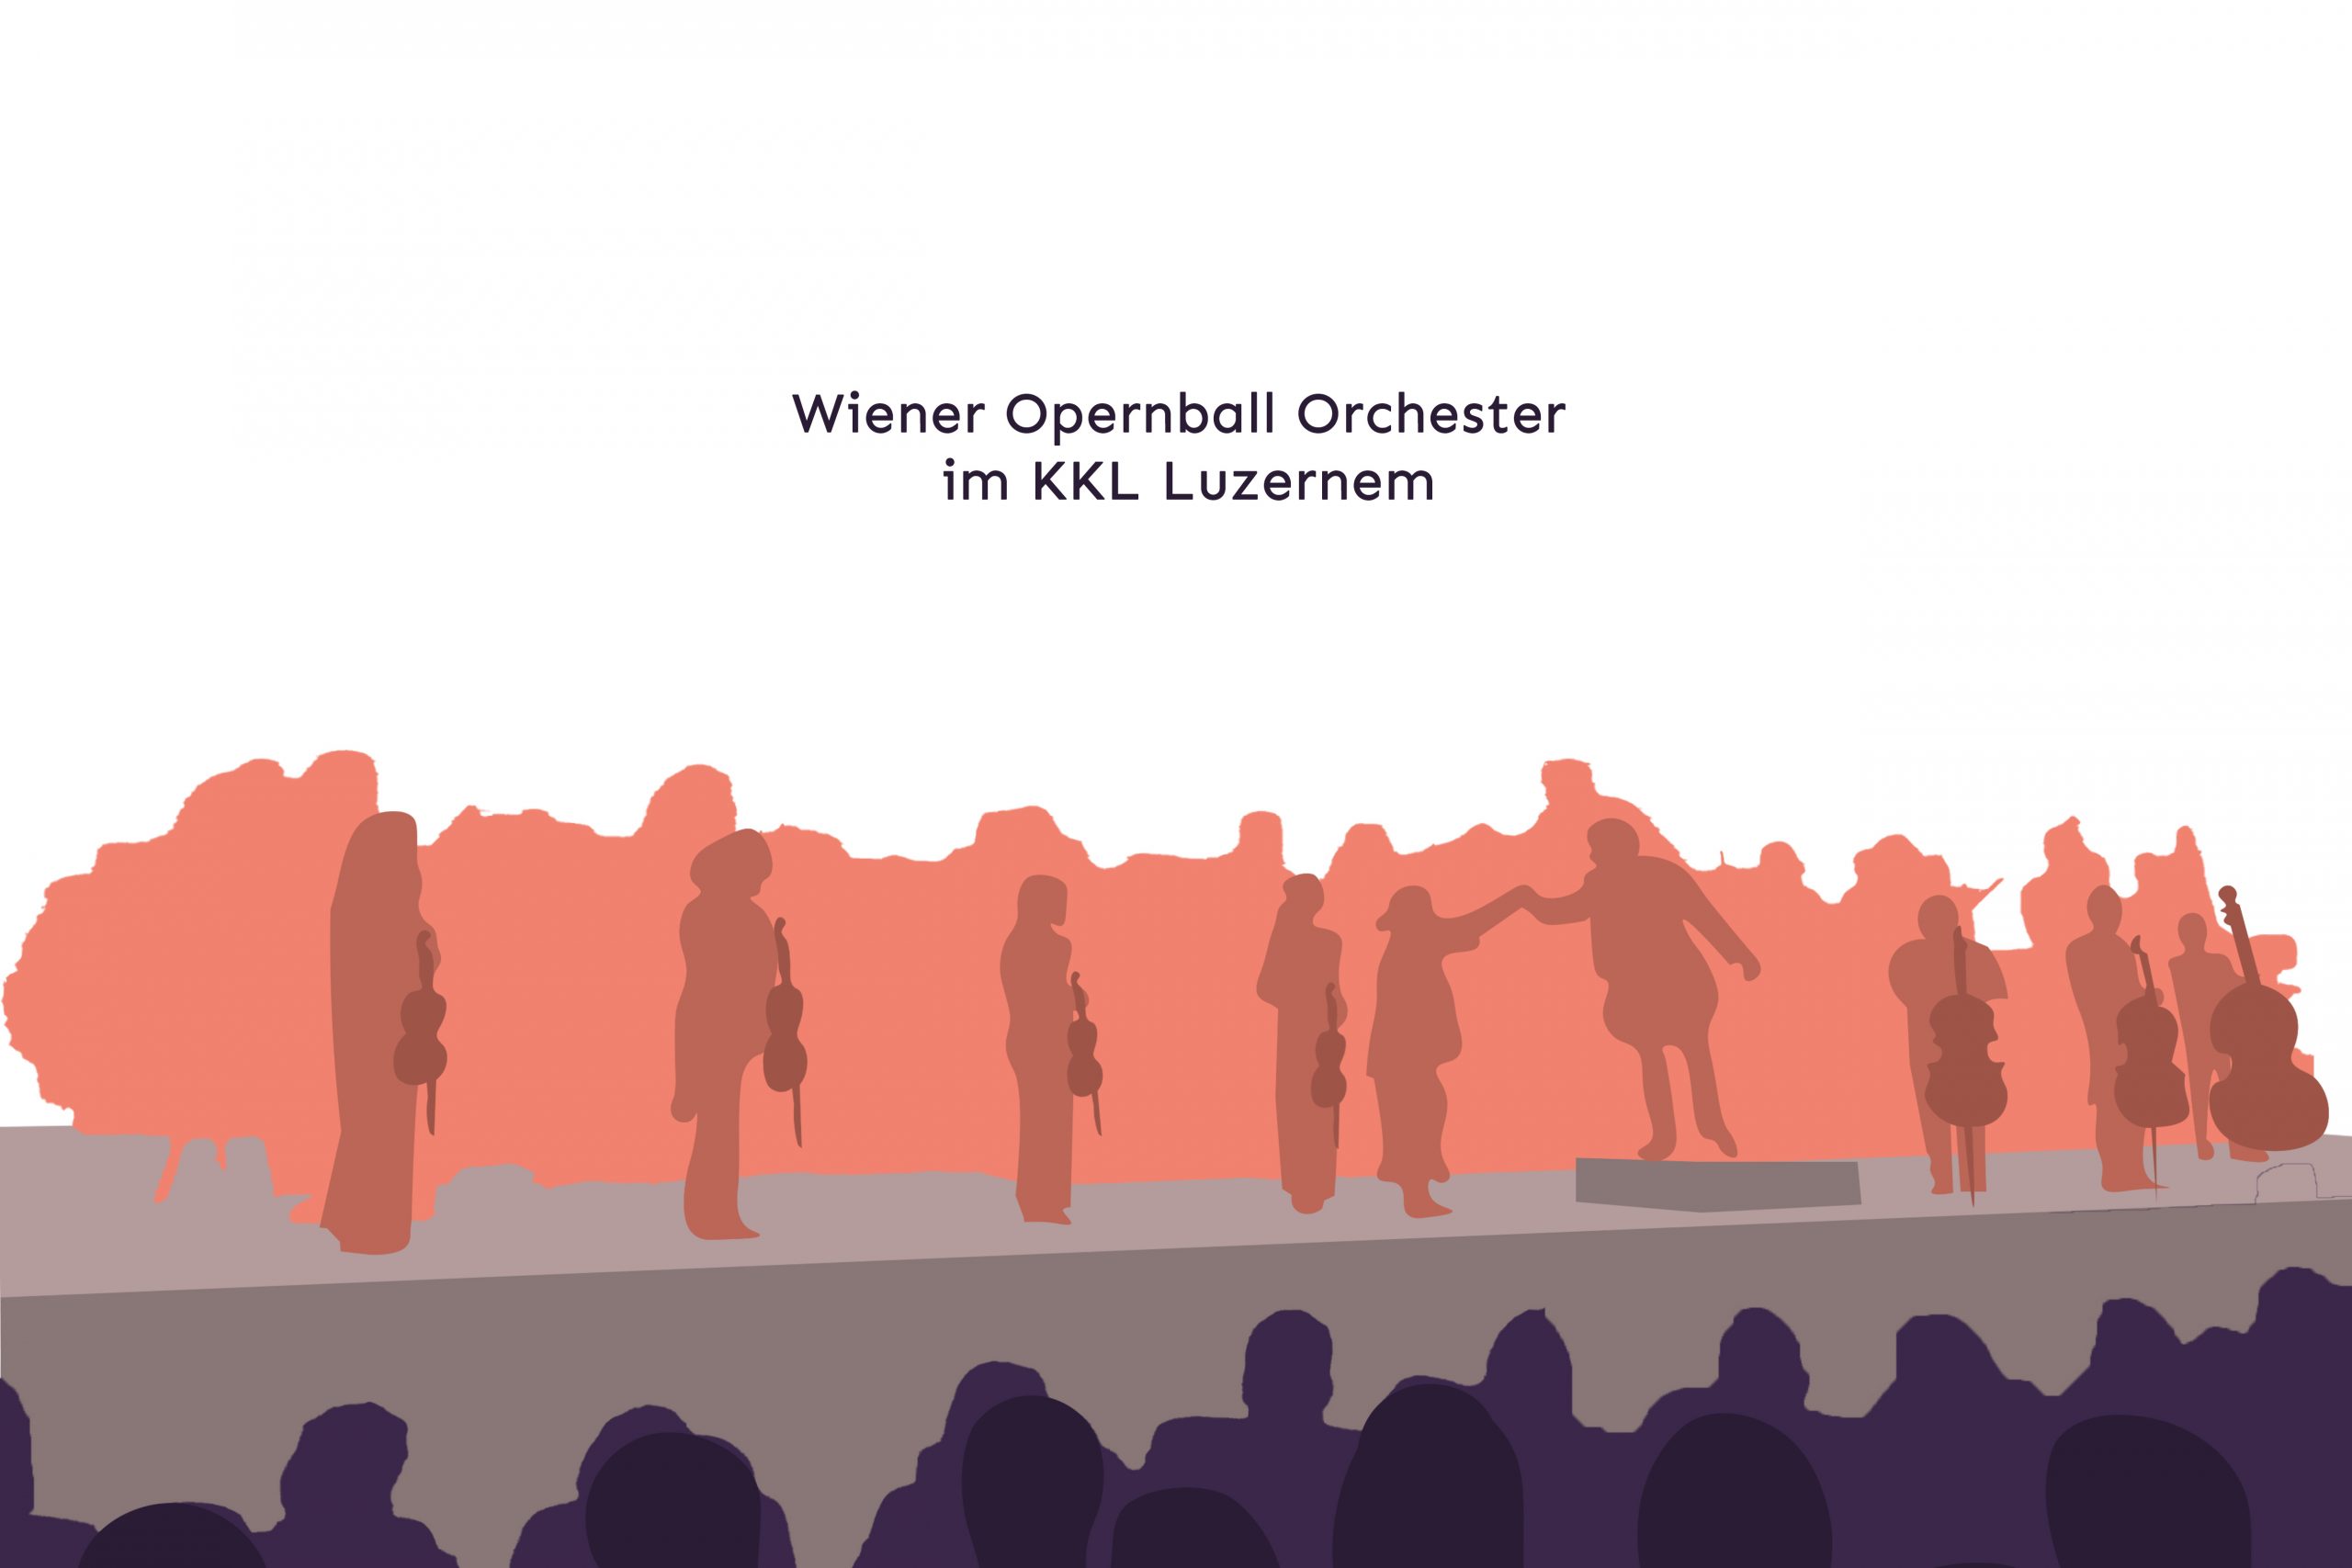 You are currently viewing Standing Ovation für das Wiener Opernball Orchester im KKL Luzern!